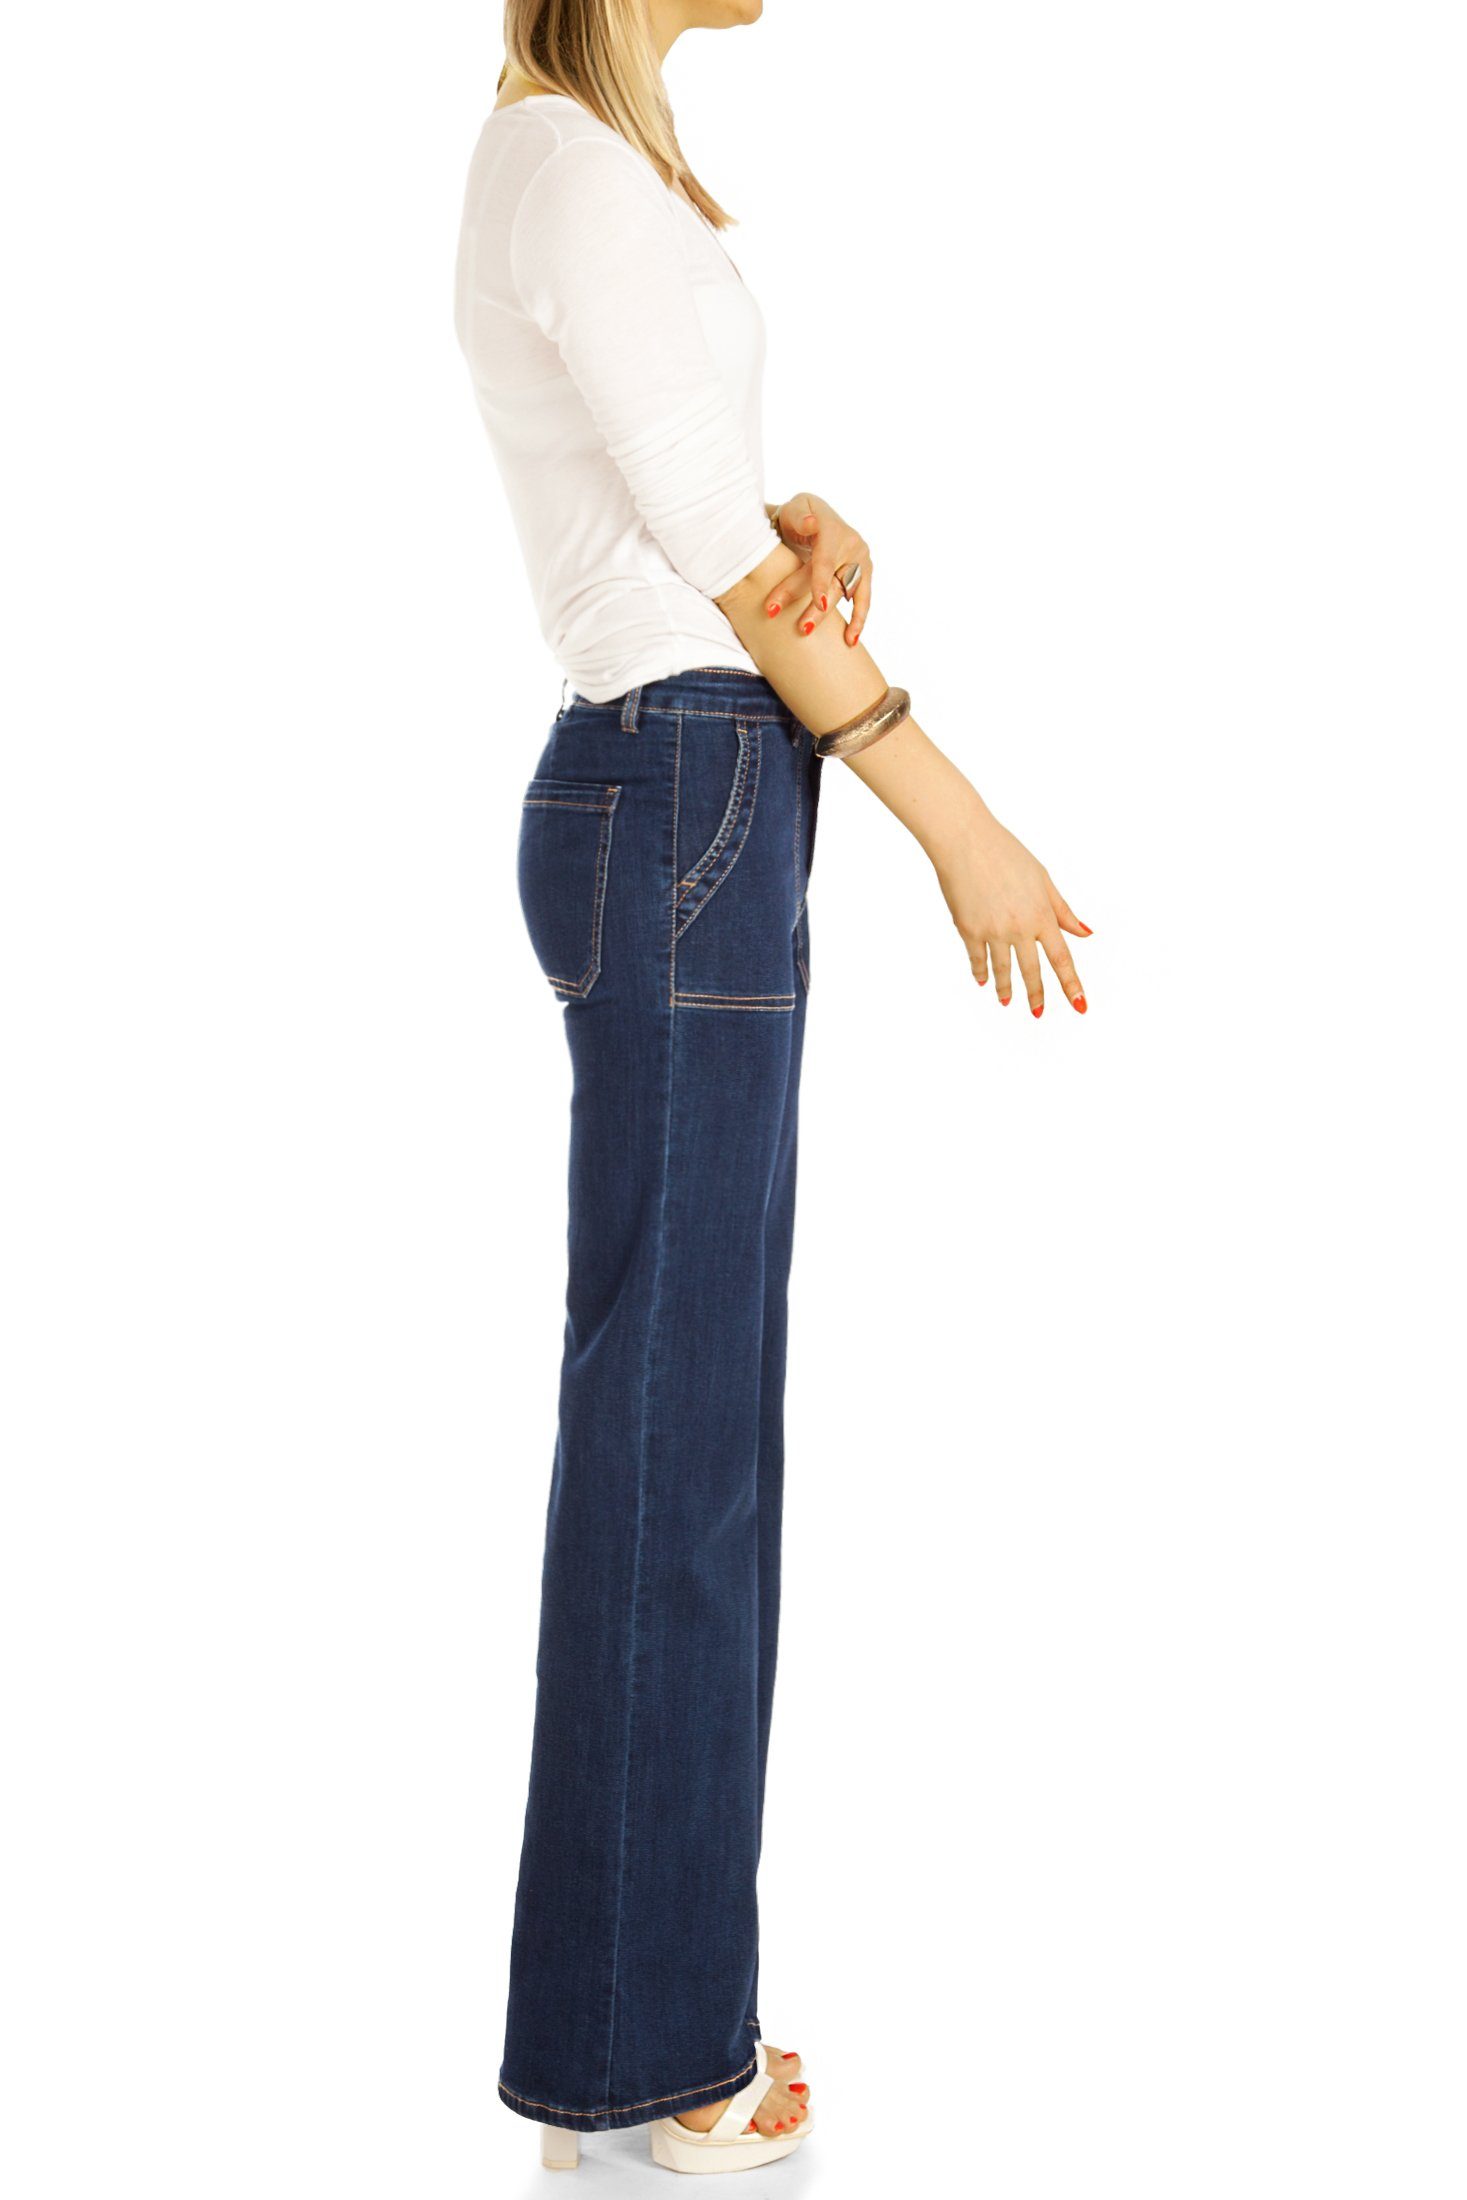 mit Bootcut-Jeans Bootcut j31k waist Damen Jeans, medium be 5-Pocket-Style - straight styled Hosen dunkelblau Passform - Stretch-Anteil,